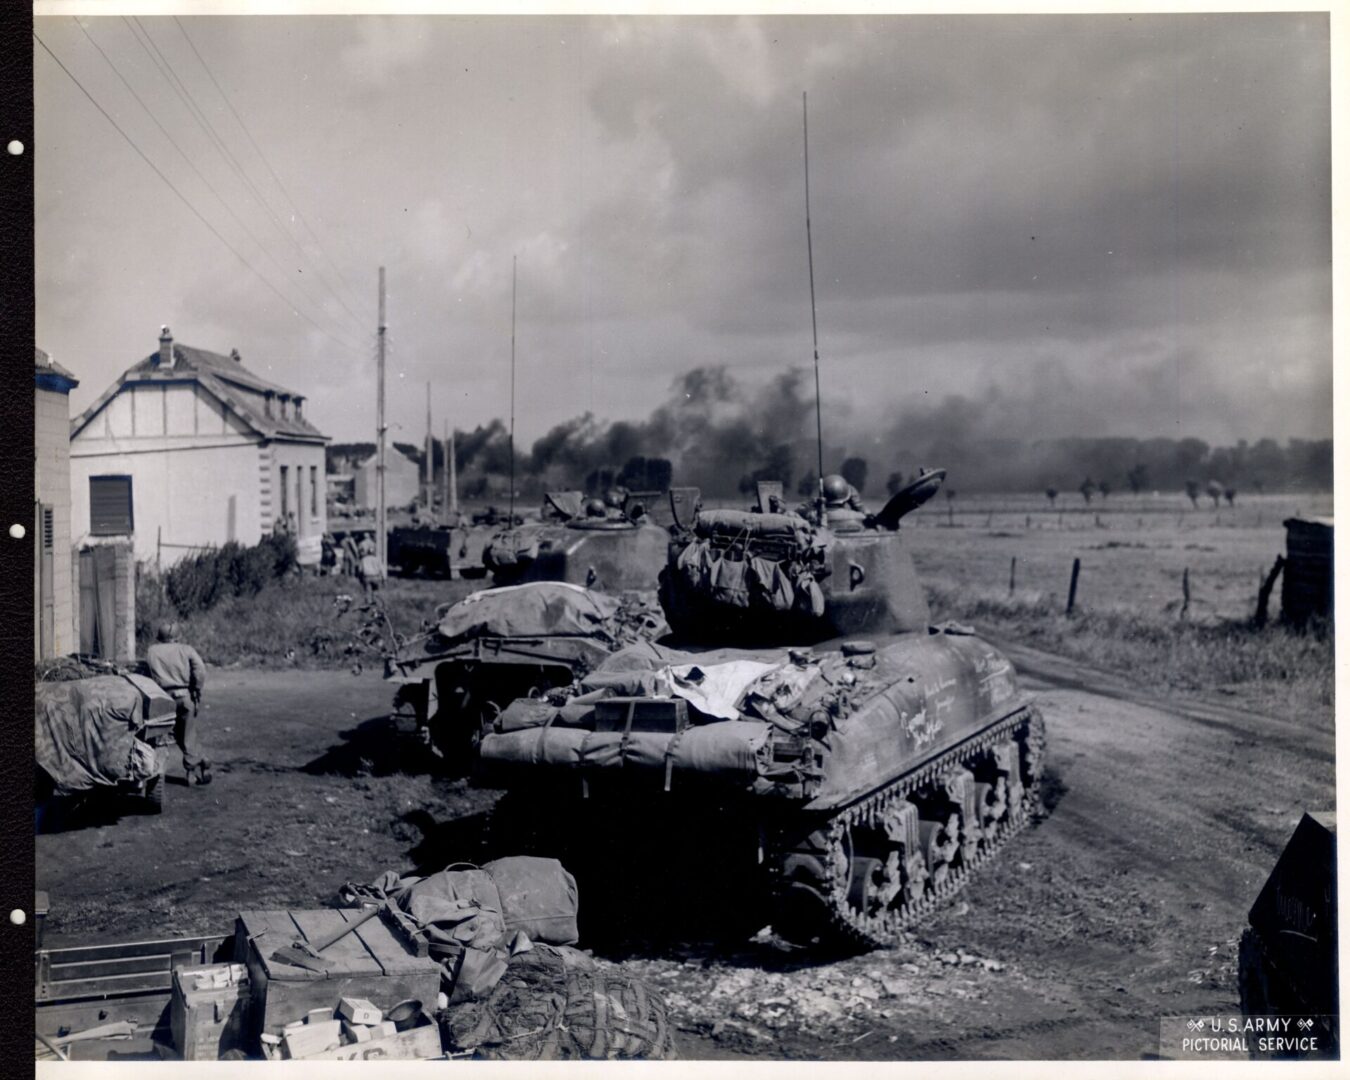 American tanks in action against Germans at Belgium